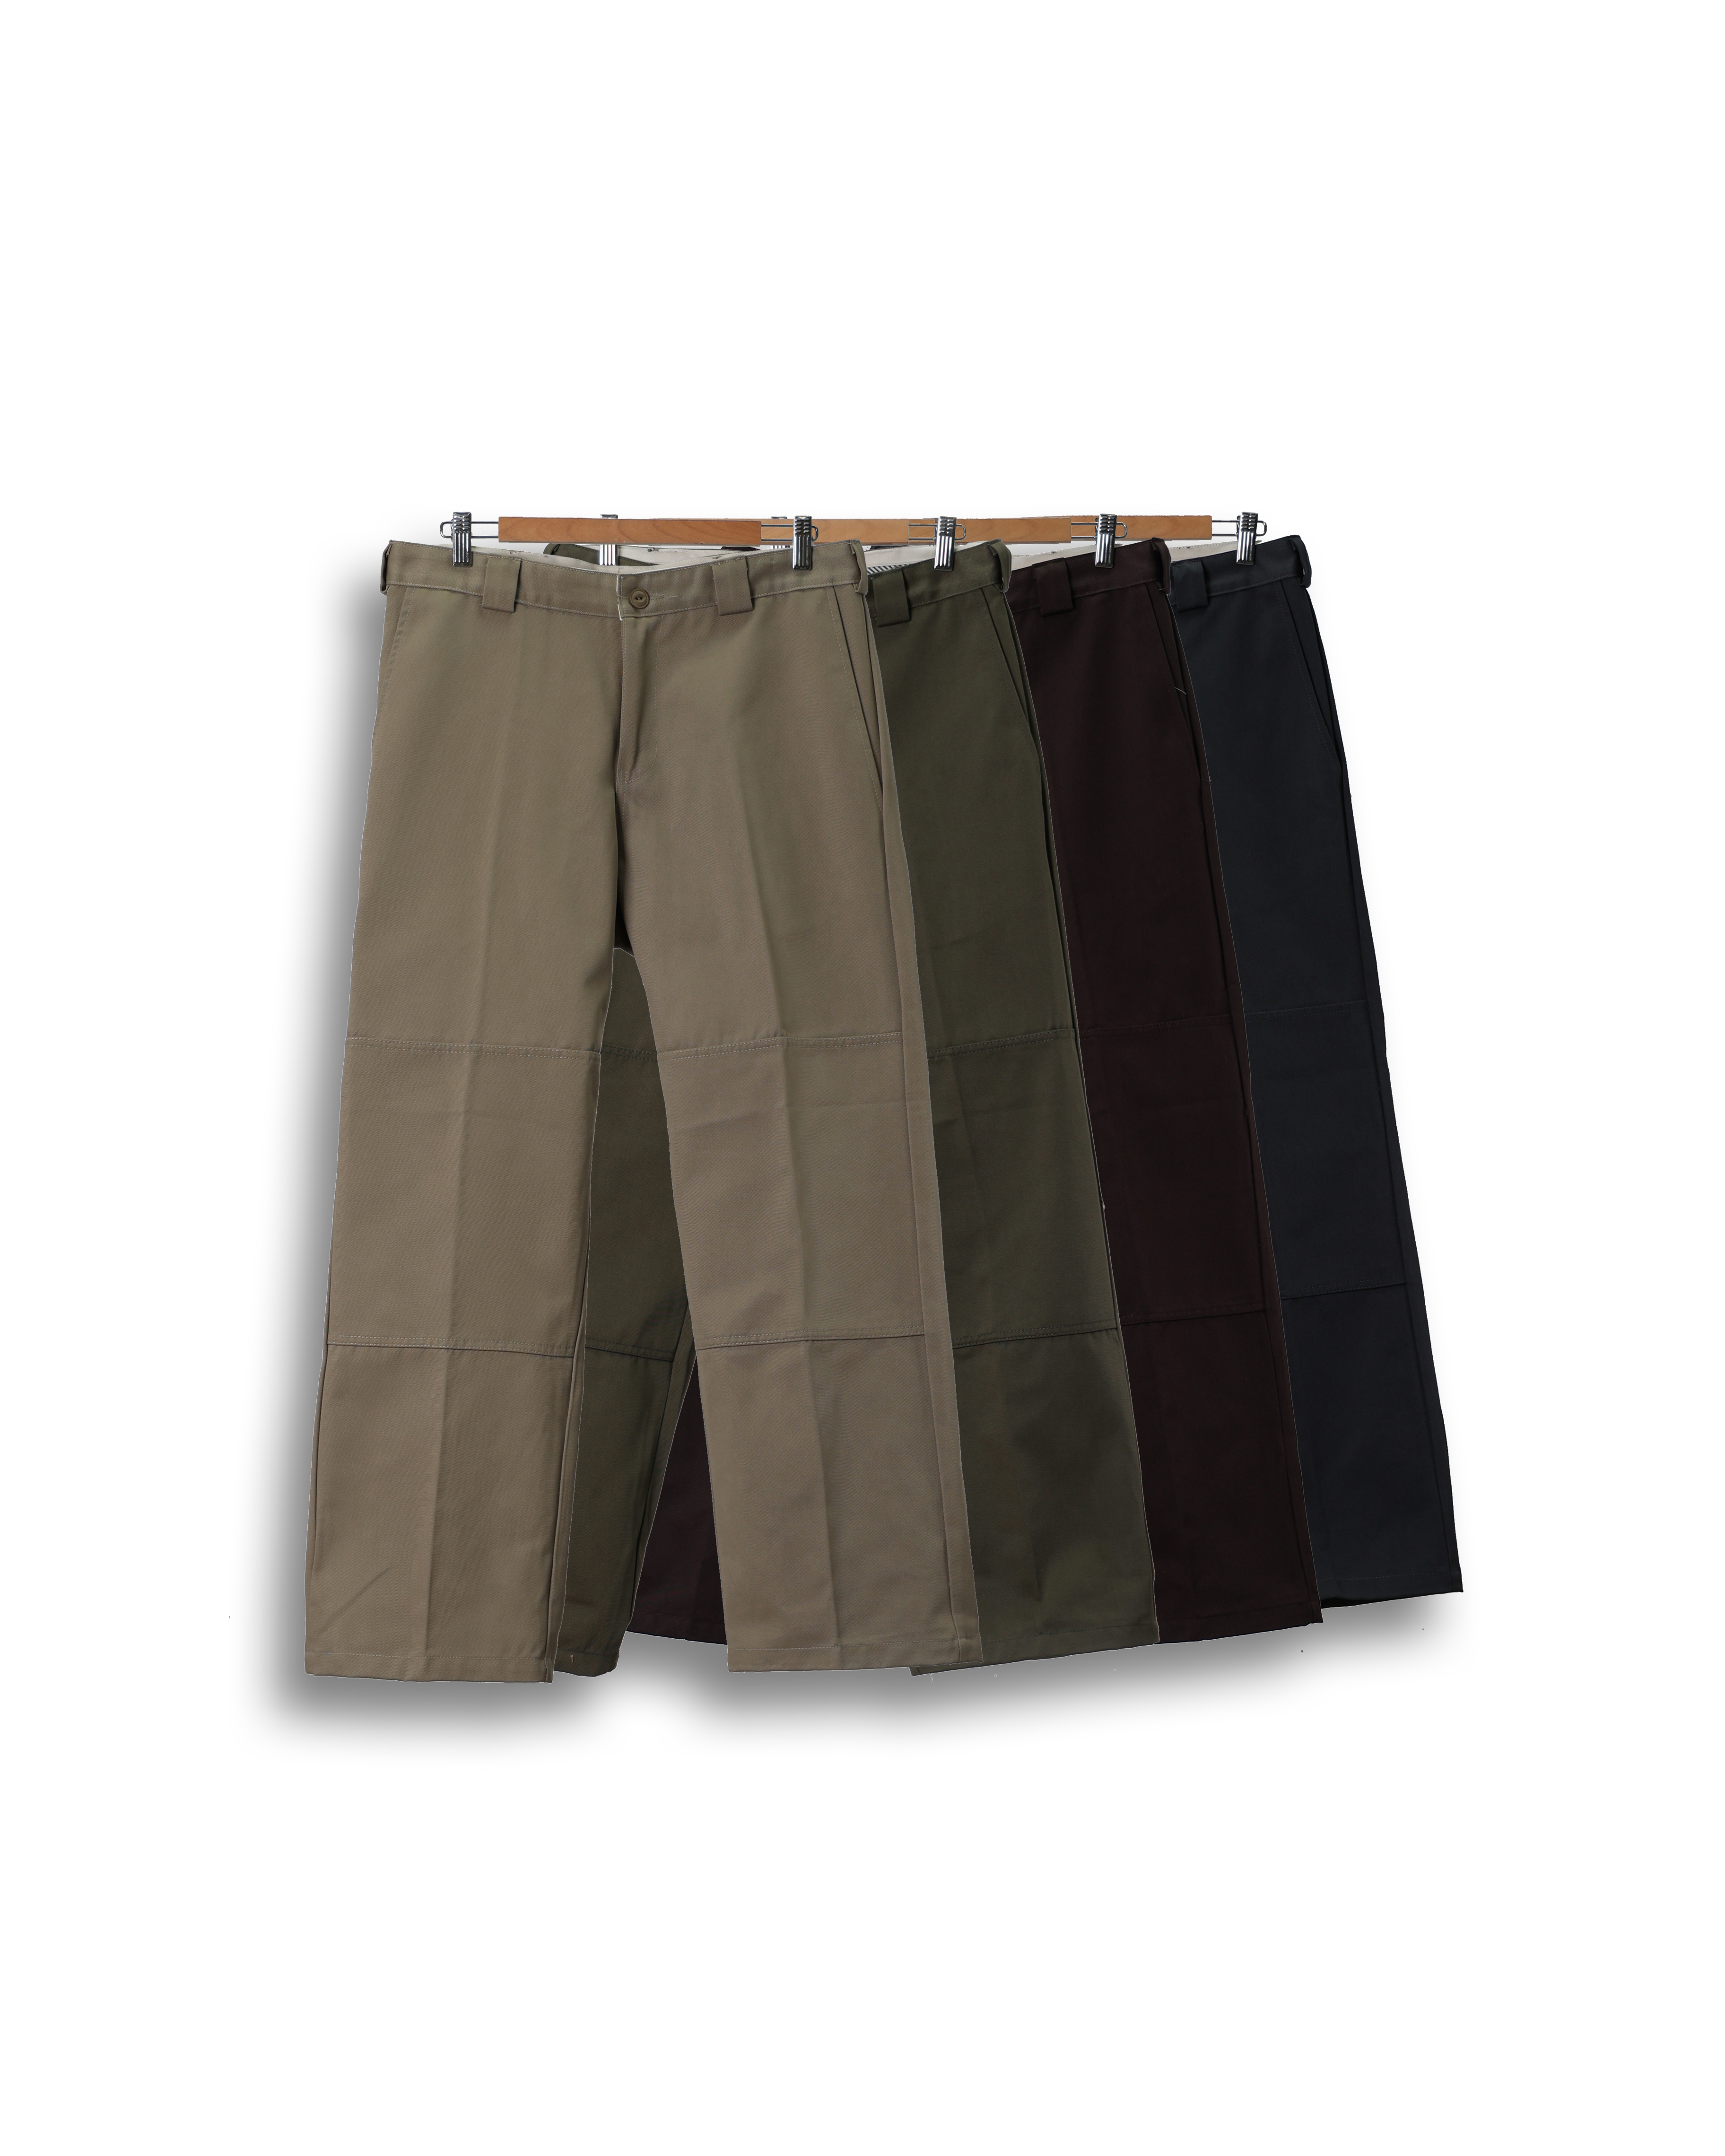 12WELVE Double Knee Classy Wide Pants (Charcoal/Brown/Olive/Beige)